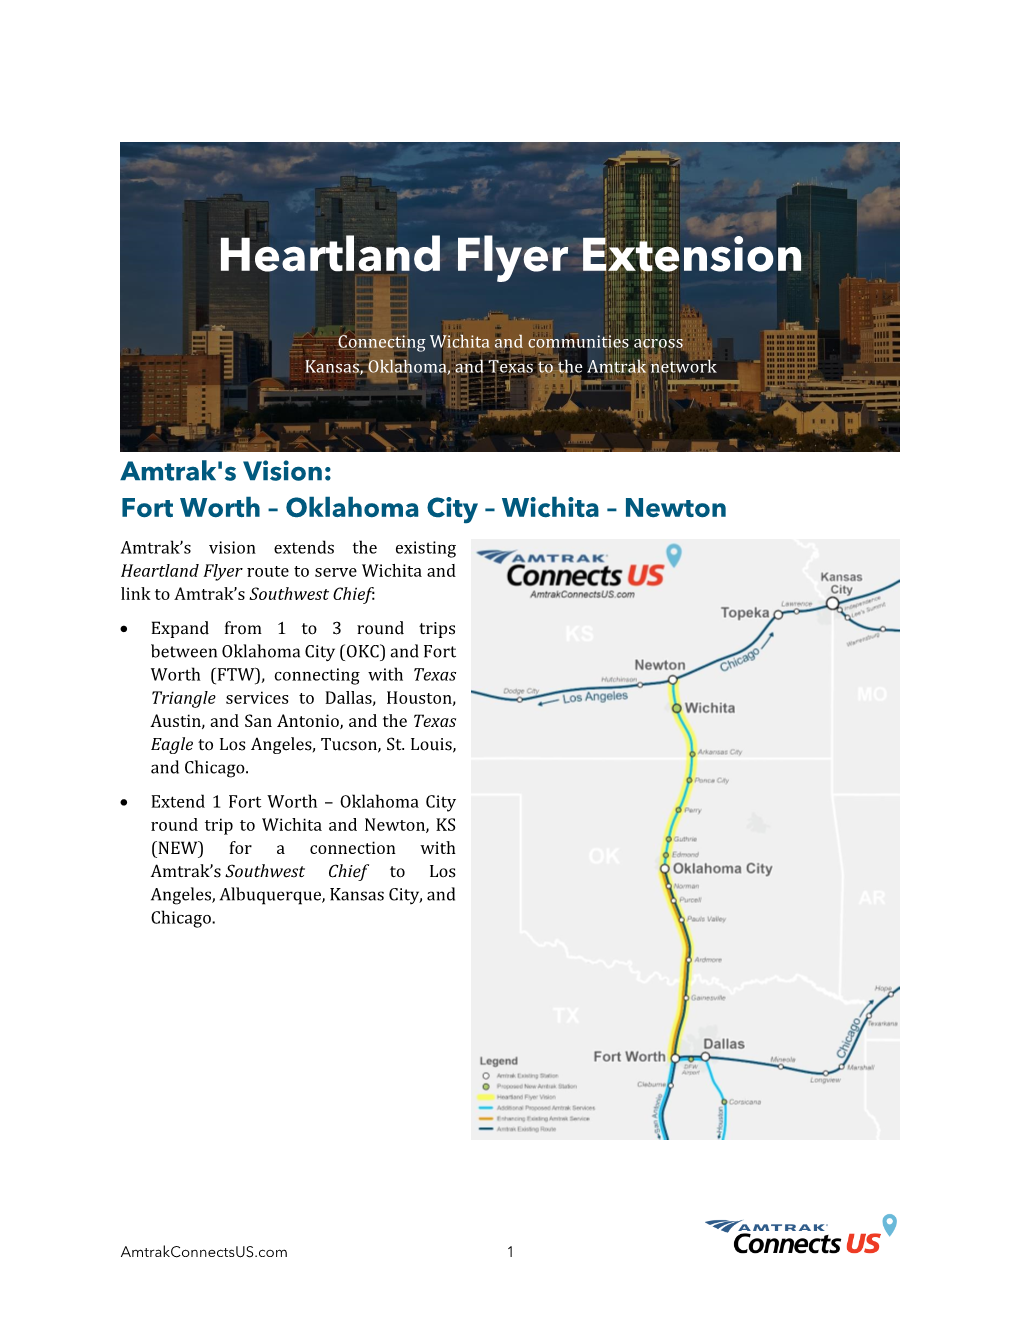 Heartland Flyer Extension Fact Sheet